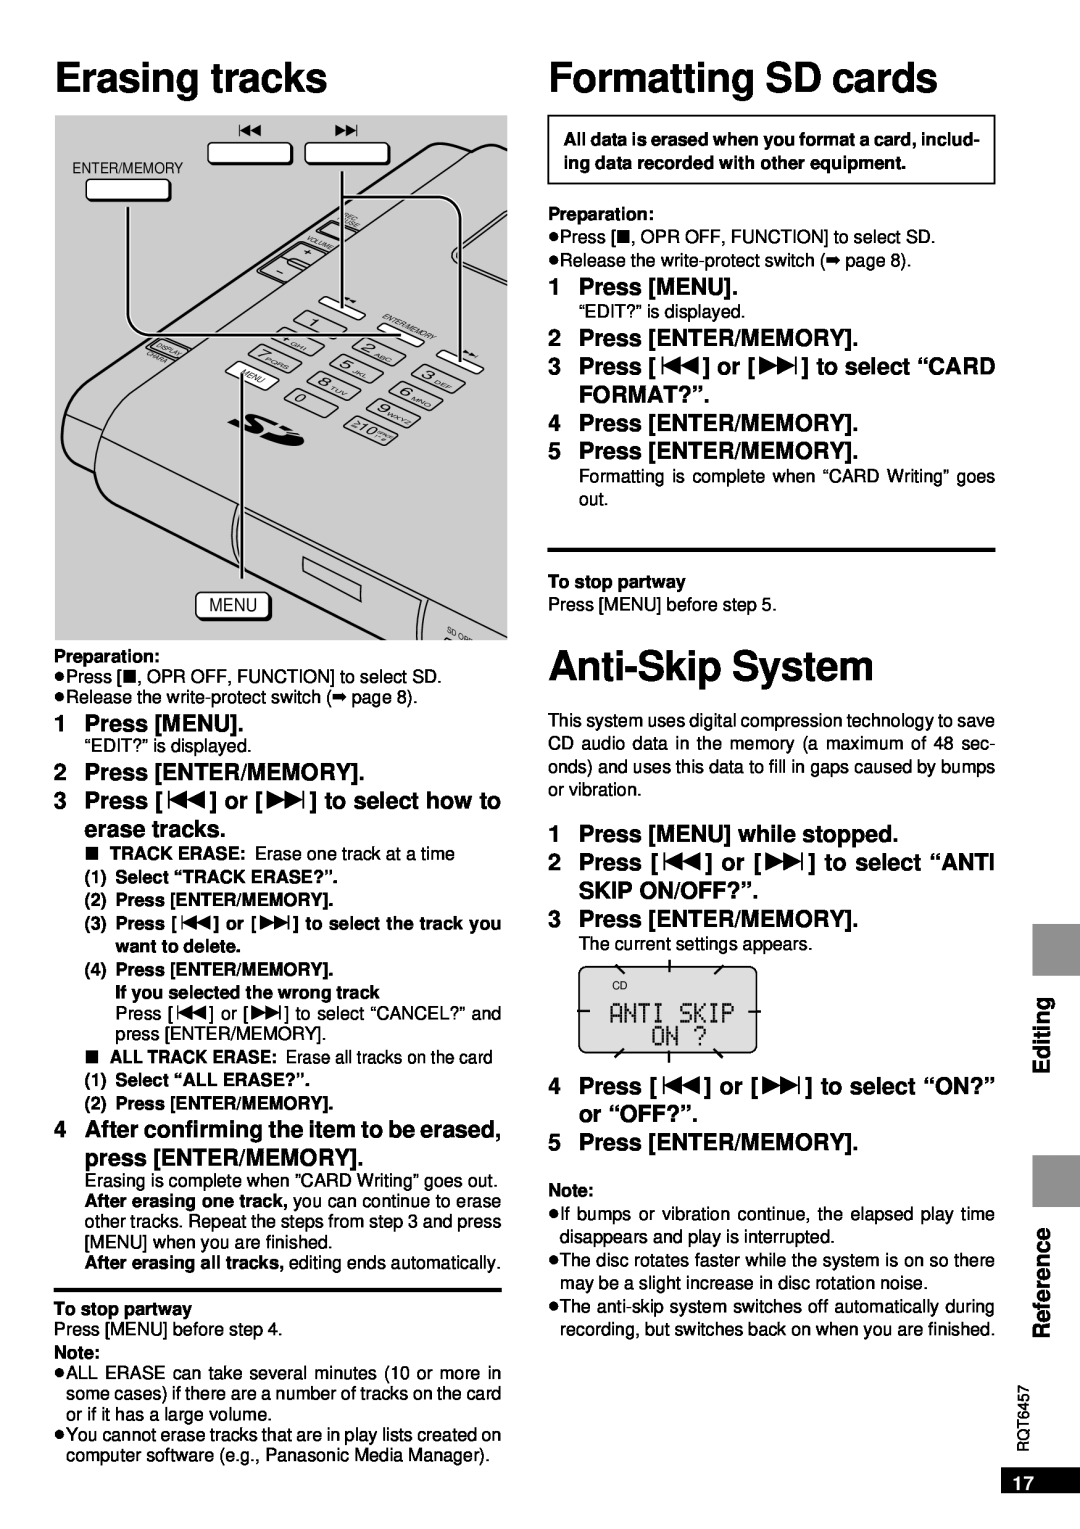 Panasonic SV-SR100 operating instructions Erasing tracks, Formatting SD cards, Anti-Skip System, Reference 